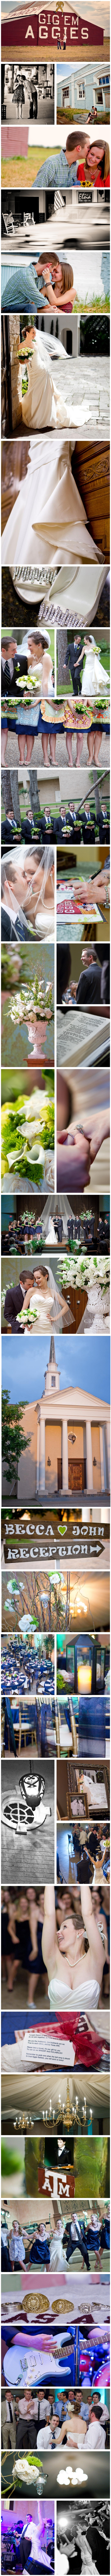 Houston Wedding Photographer, Heights Villa, Aggie Wedding, Texas A&M, 12th Man Towel, First Baptist Church, Bell Tower Bridals, College Station, 